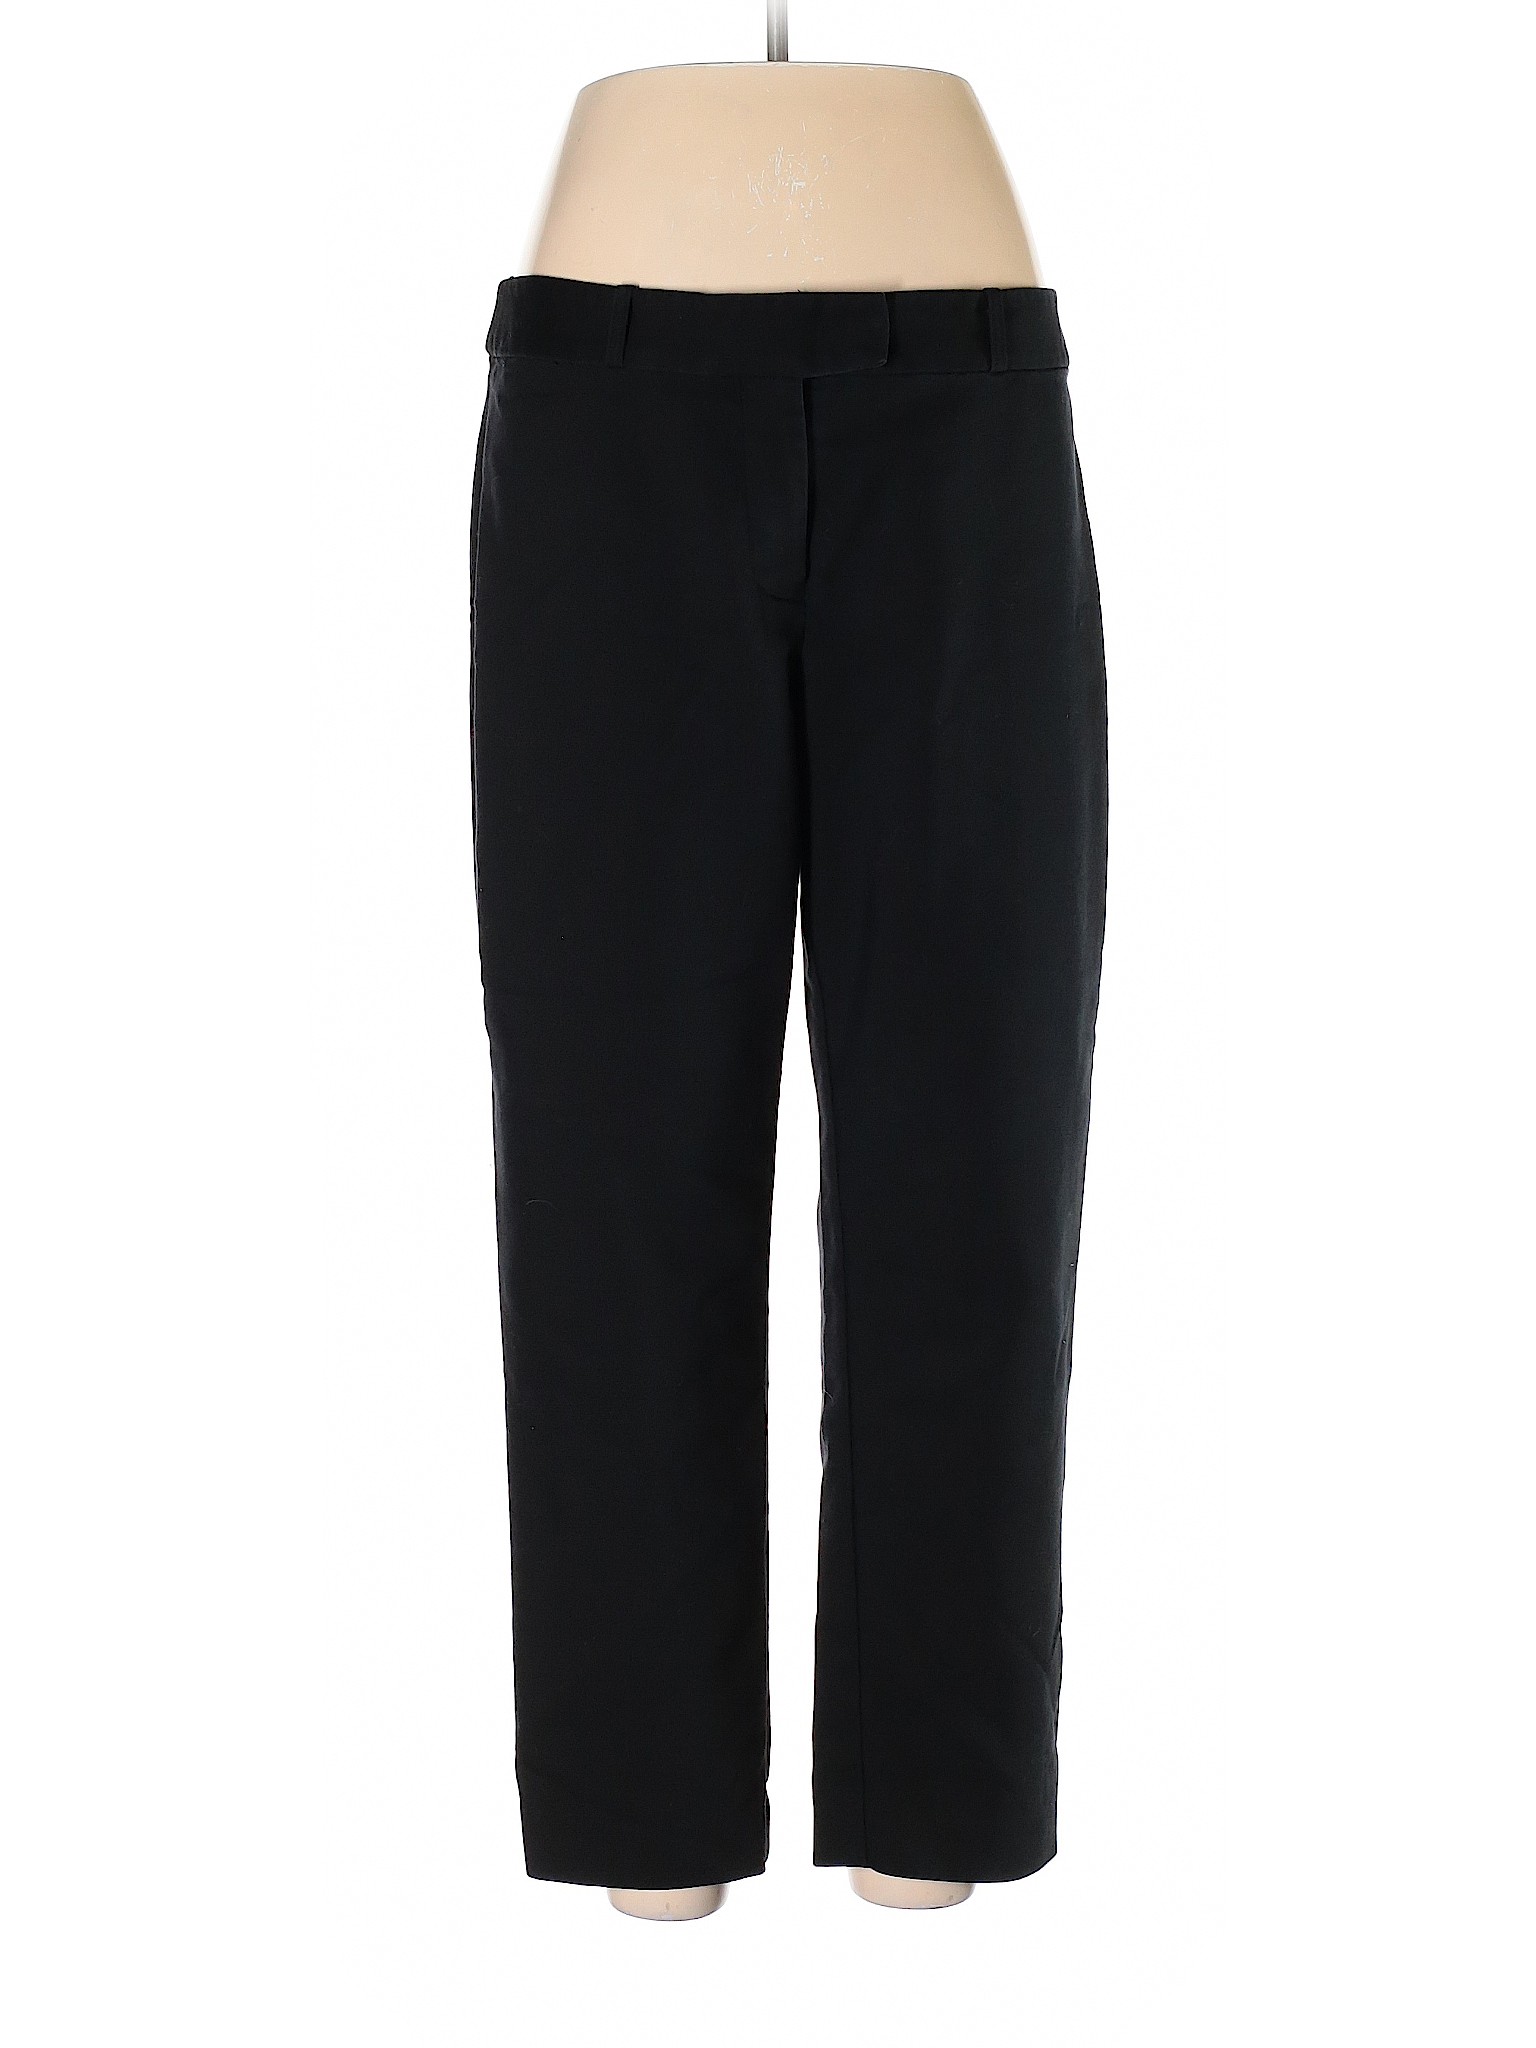 Liz Claiborne Women Black Dress Pants 12 | eBay